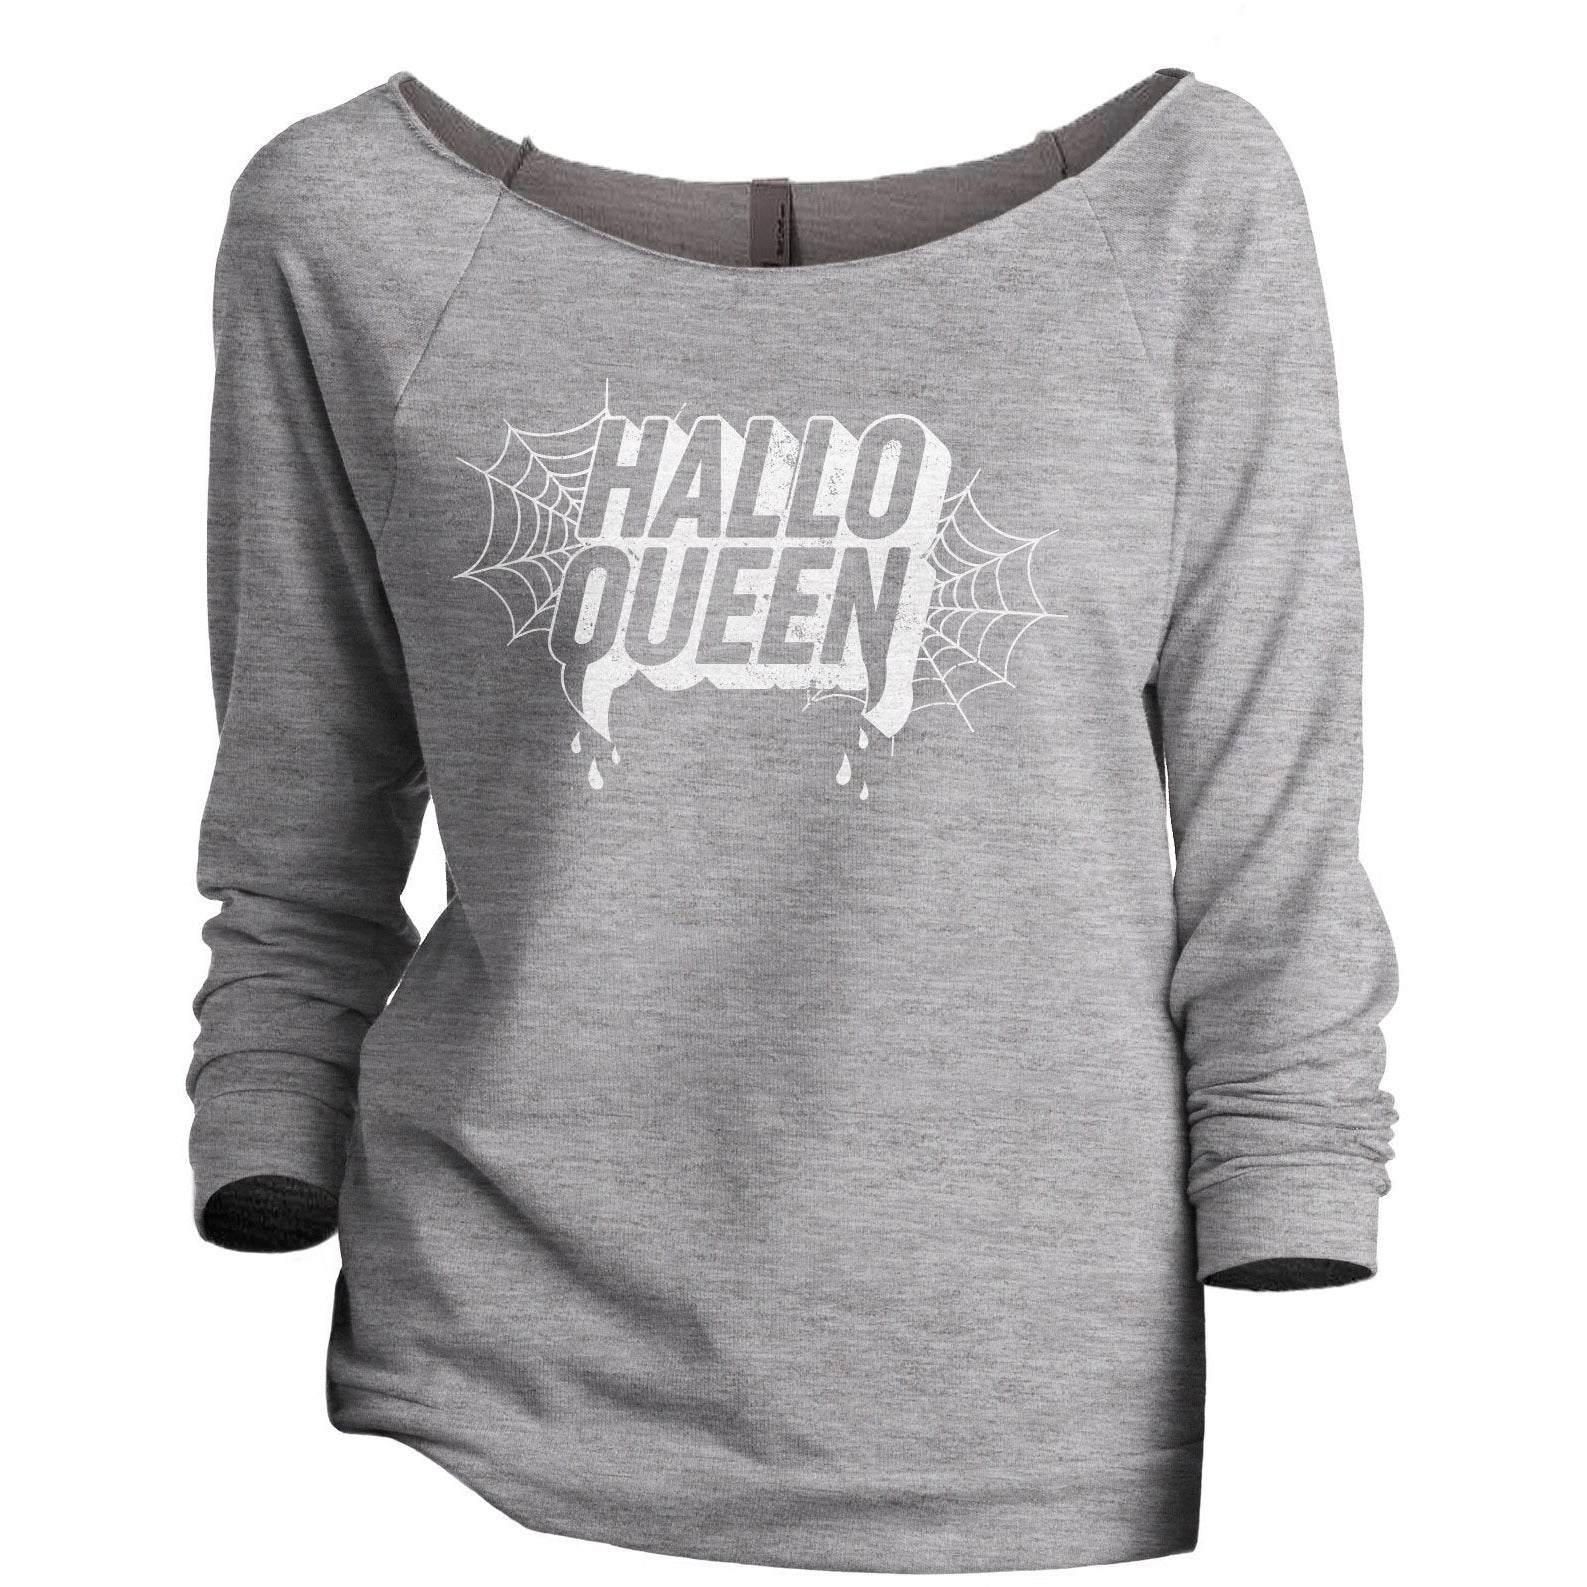 Hallo Queen Women's Graphic Printed Lightweight Slouchy 3/4 Sleeves Sweatshirt Sport Grey